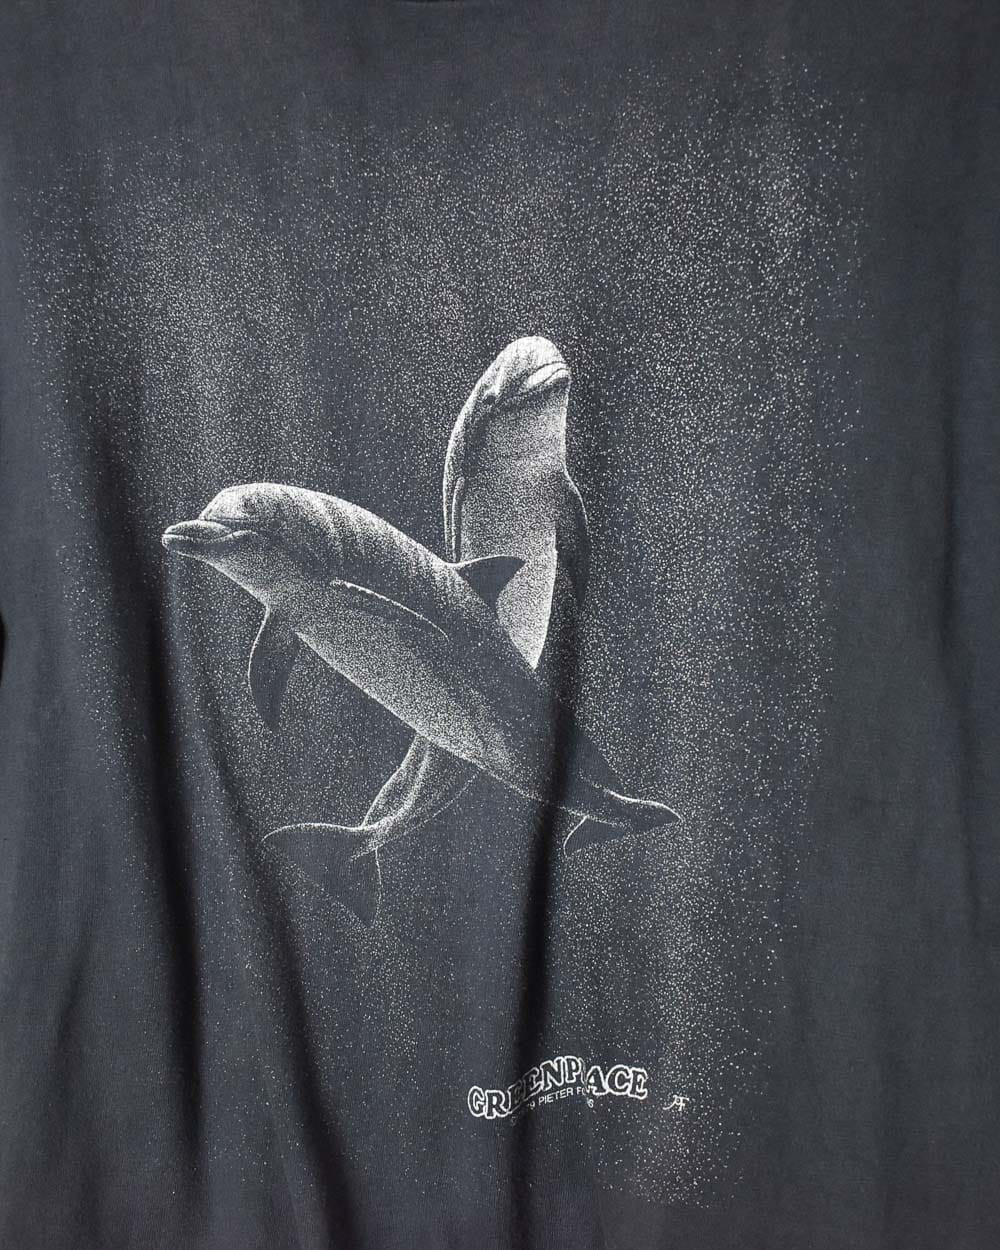 Grey Greenpeace Dolphins Graphic T-Shirt - Medium